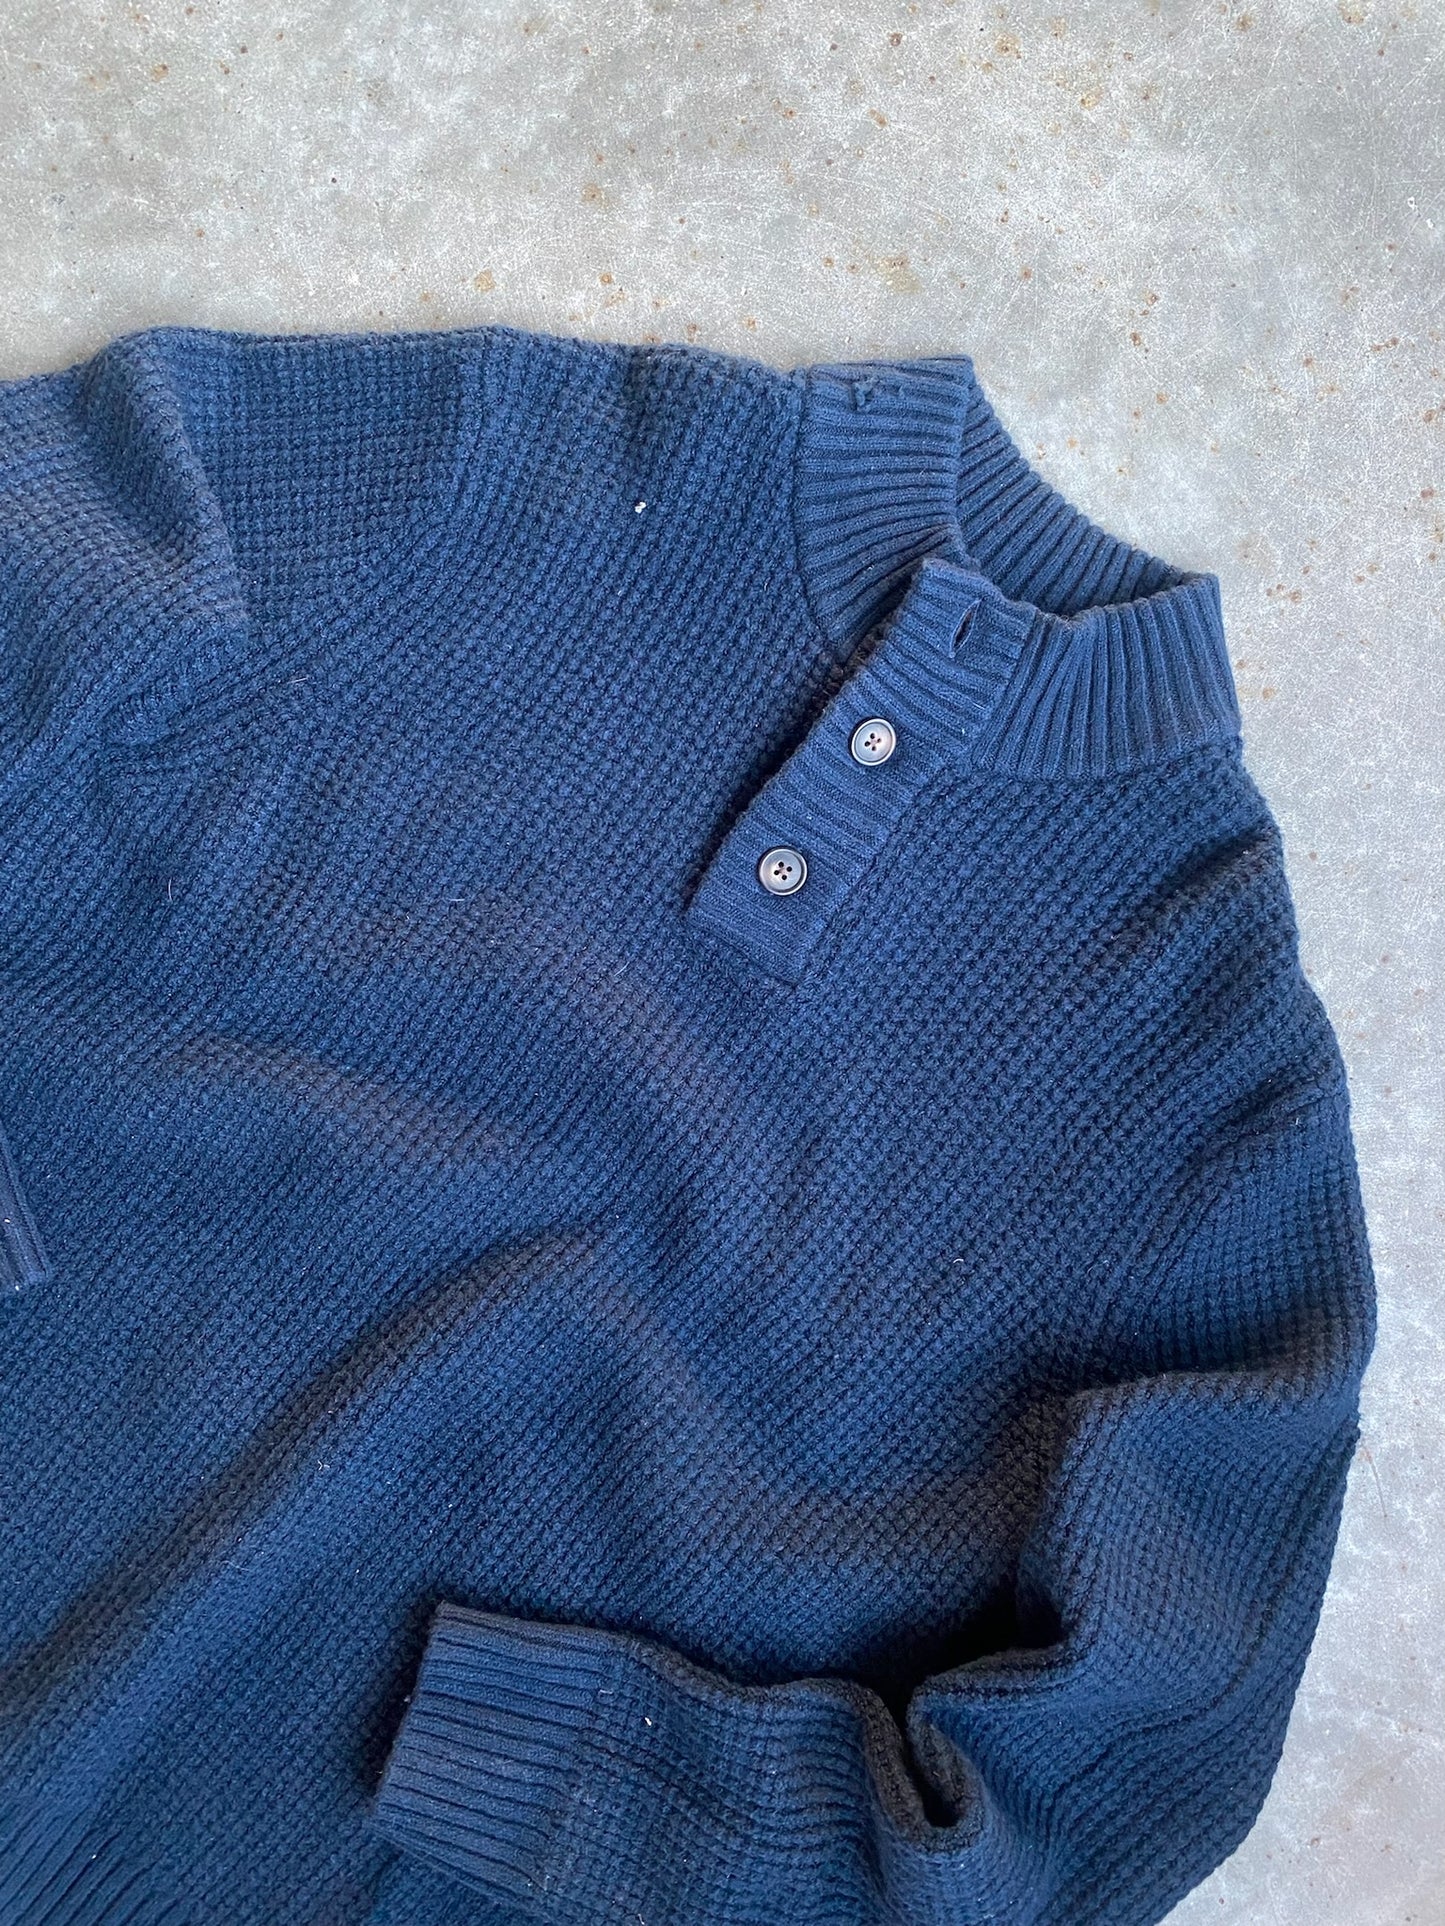 Vintage Old Navy Sweater - L